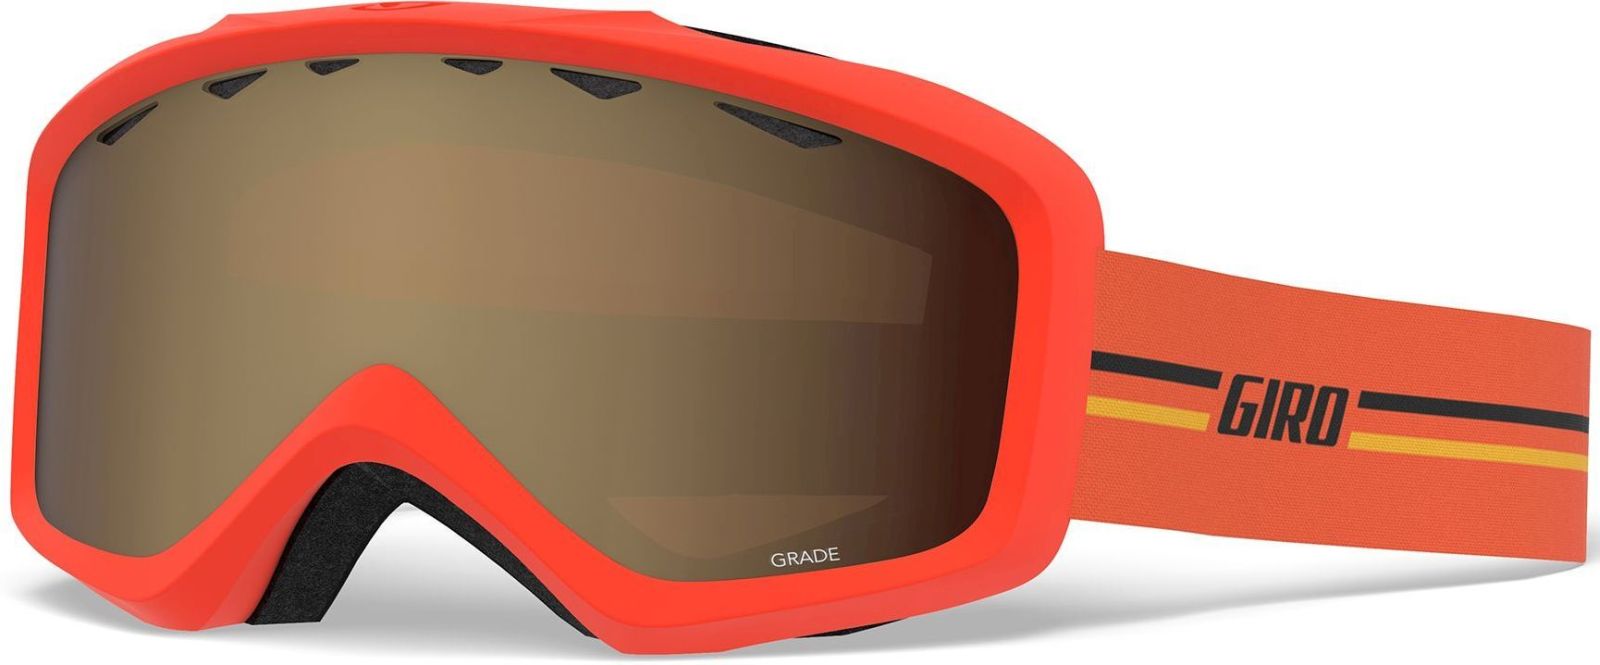 Giro Grade - GP Orange AR40